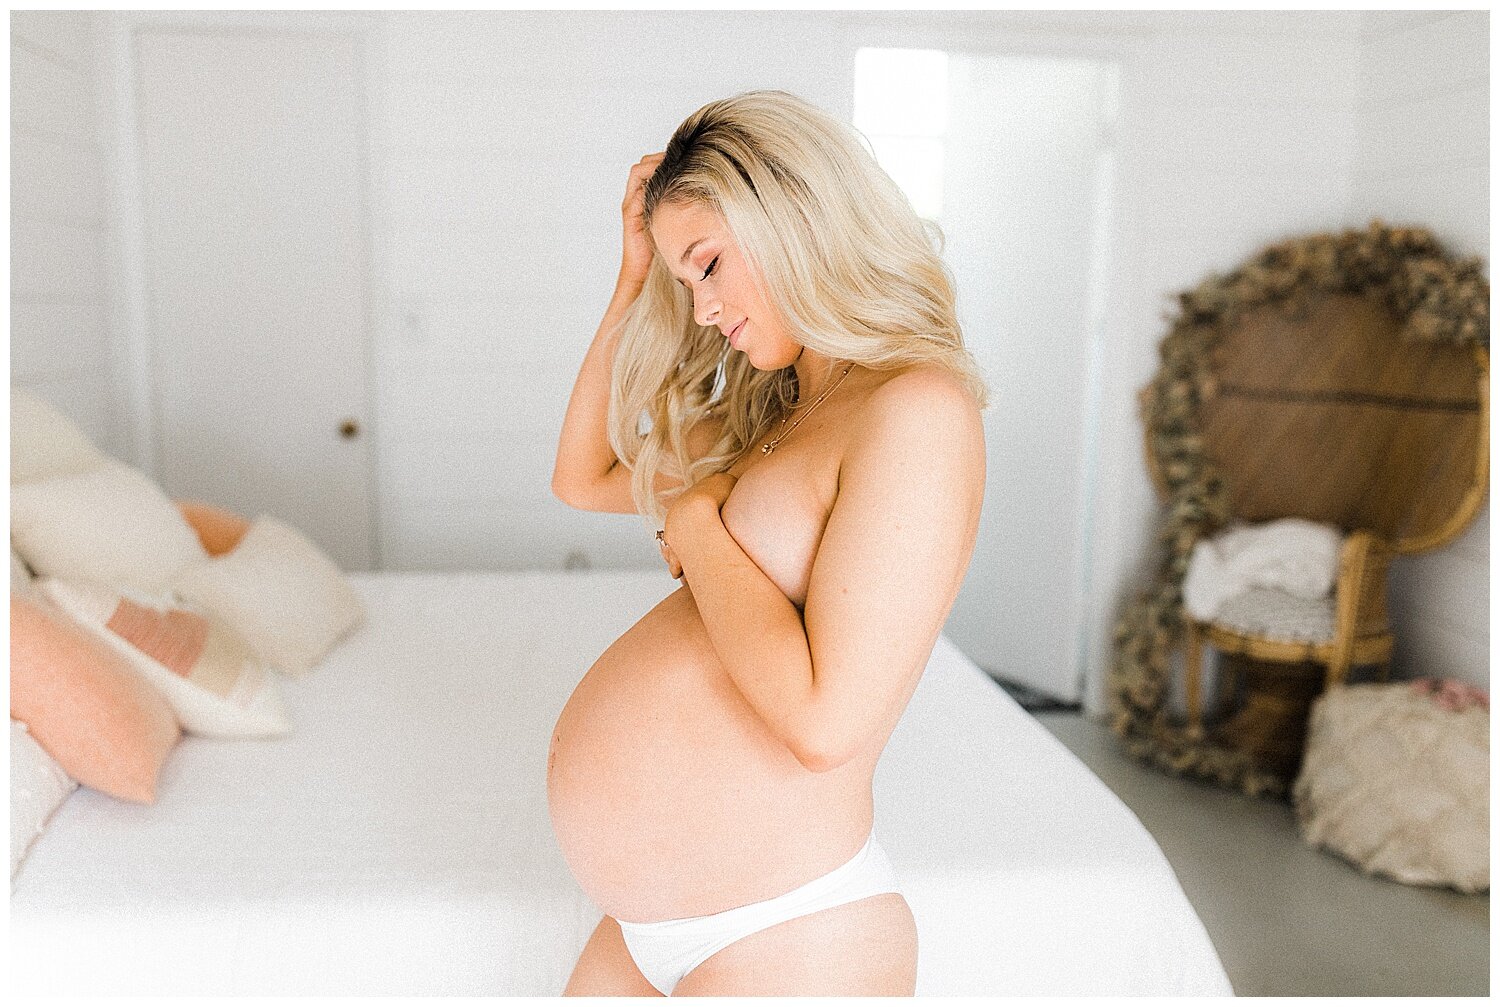 Hot Nude Pregnant Boudoir - Boudoir Photography Hot Mom | Niche Top Mature